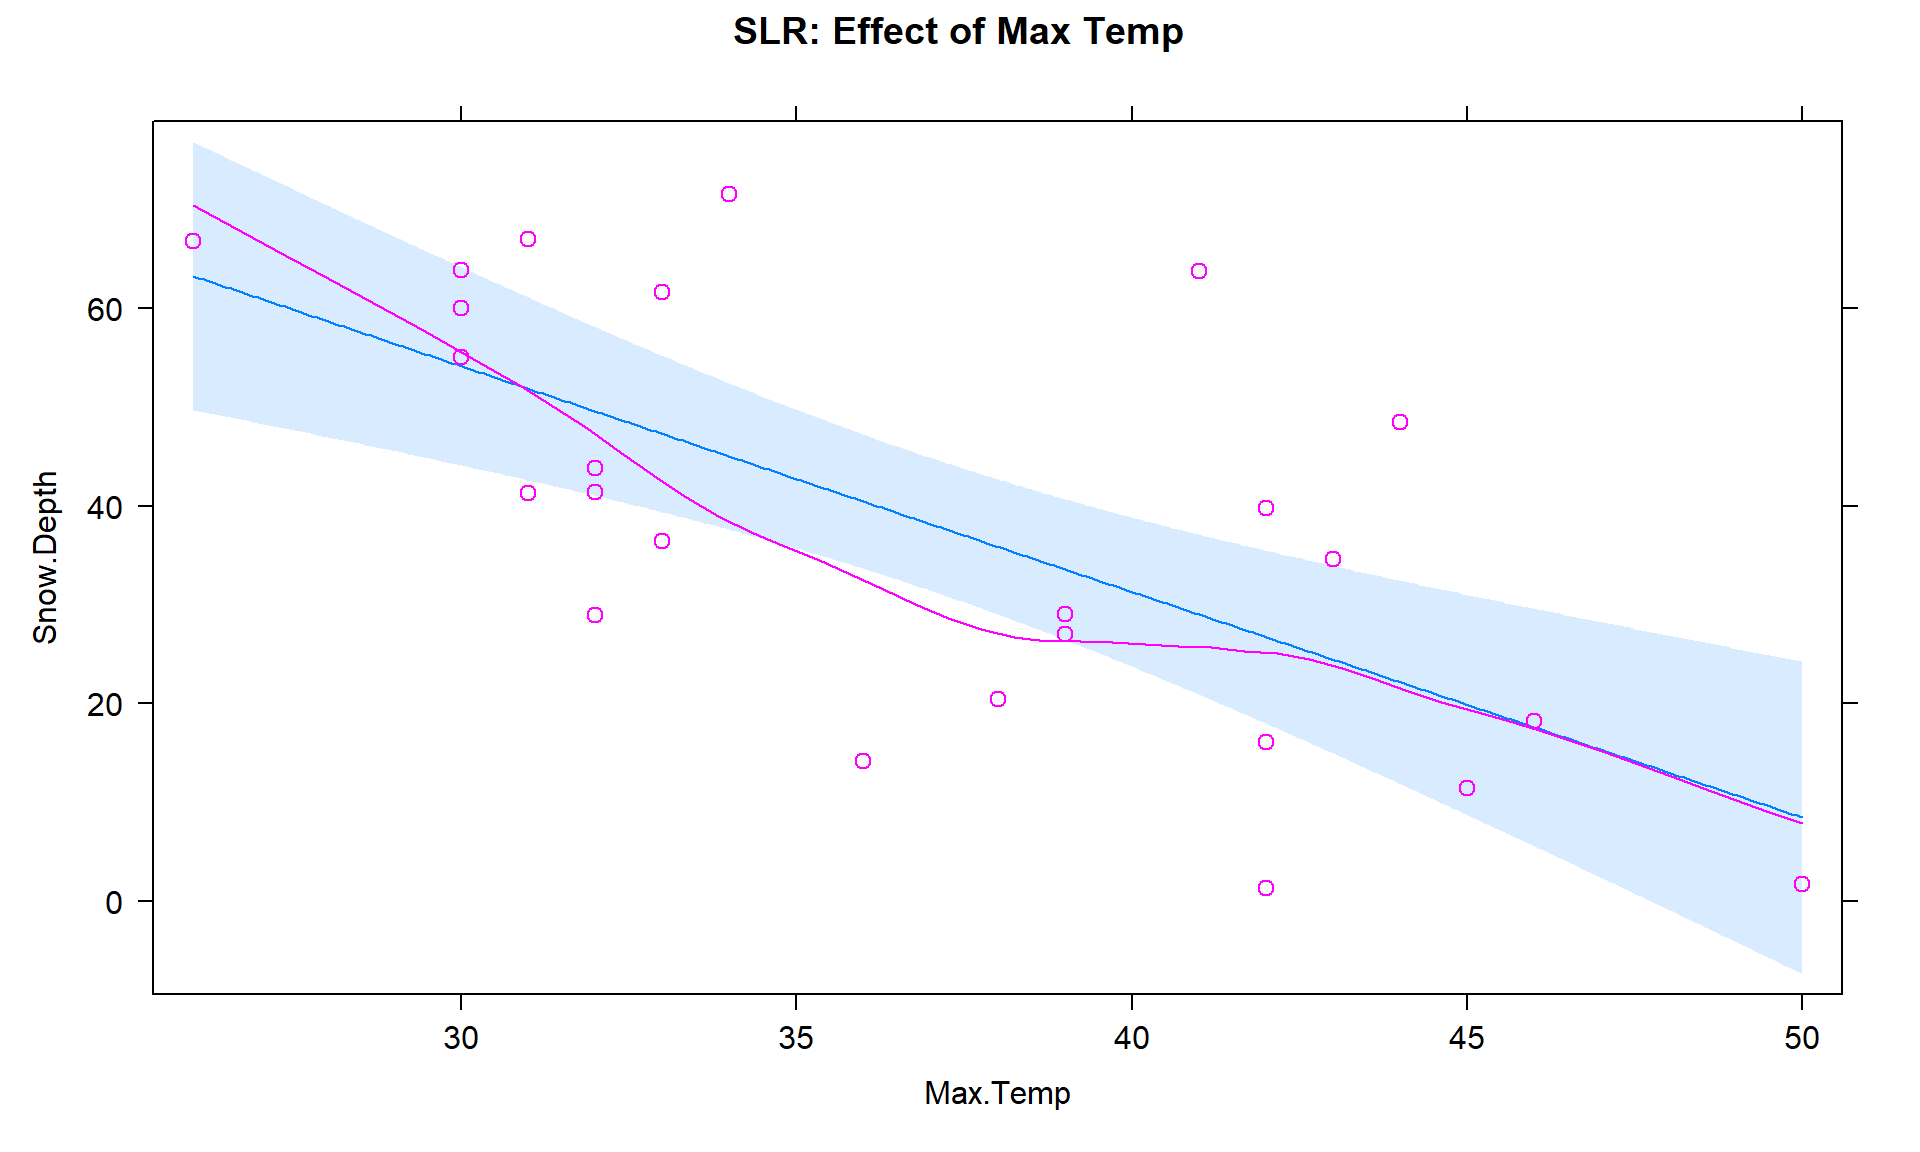 Plot of the estimated SLR model using Max Temp as predictor.